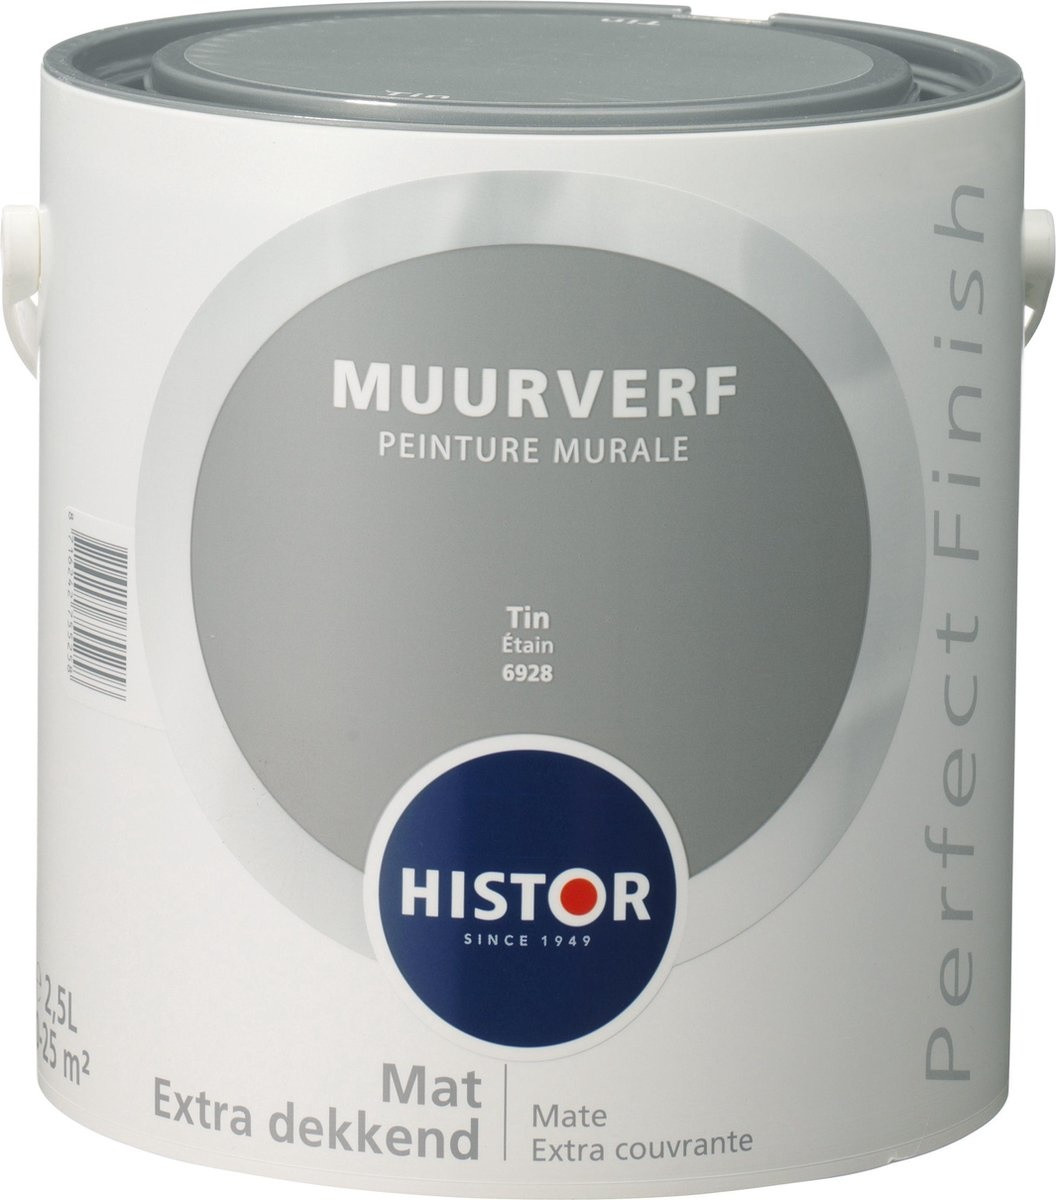 Histor Perfect Finish Muurverf Mat - Tin - 2,5 liter